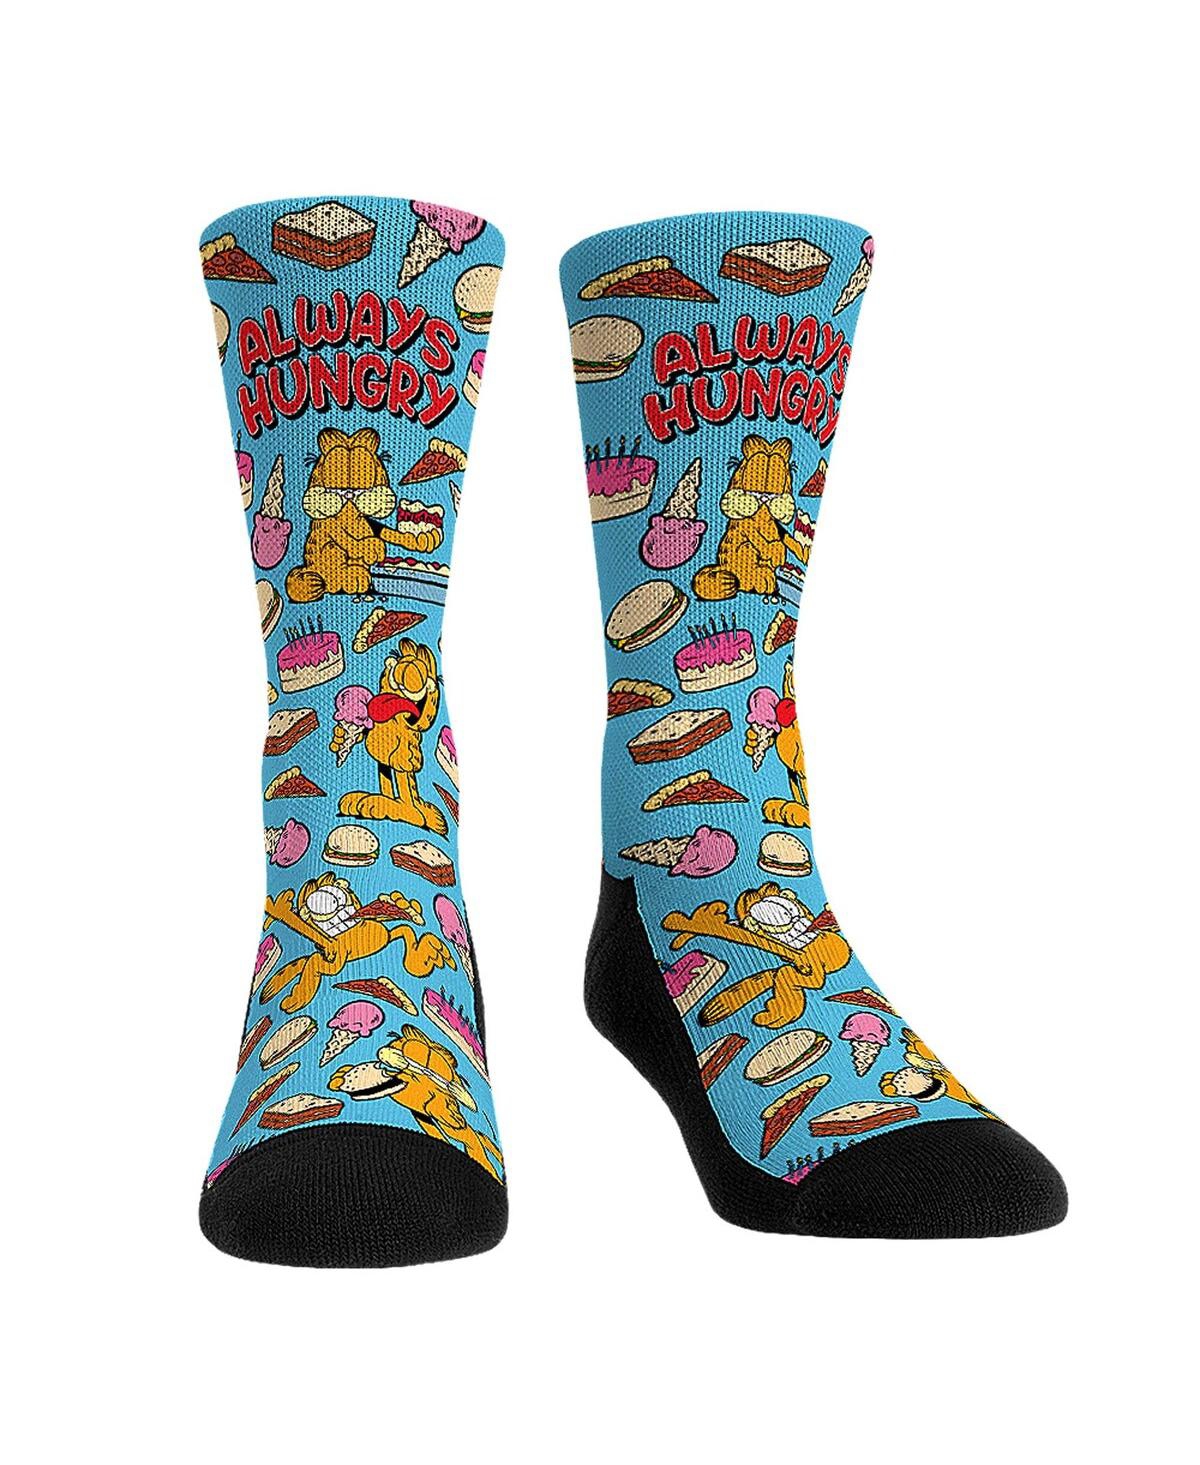 Men's and Women's Socks Garfield Always Hungry Crew Socks